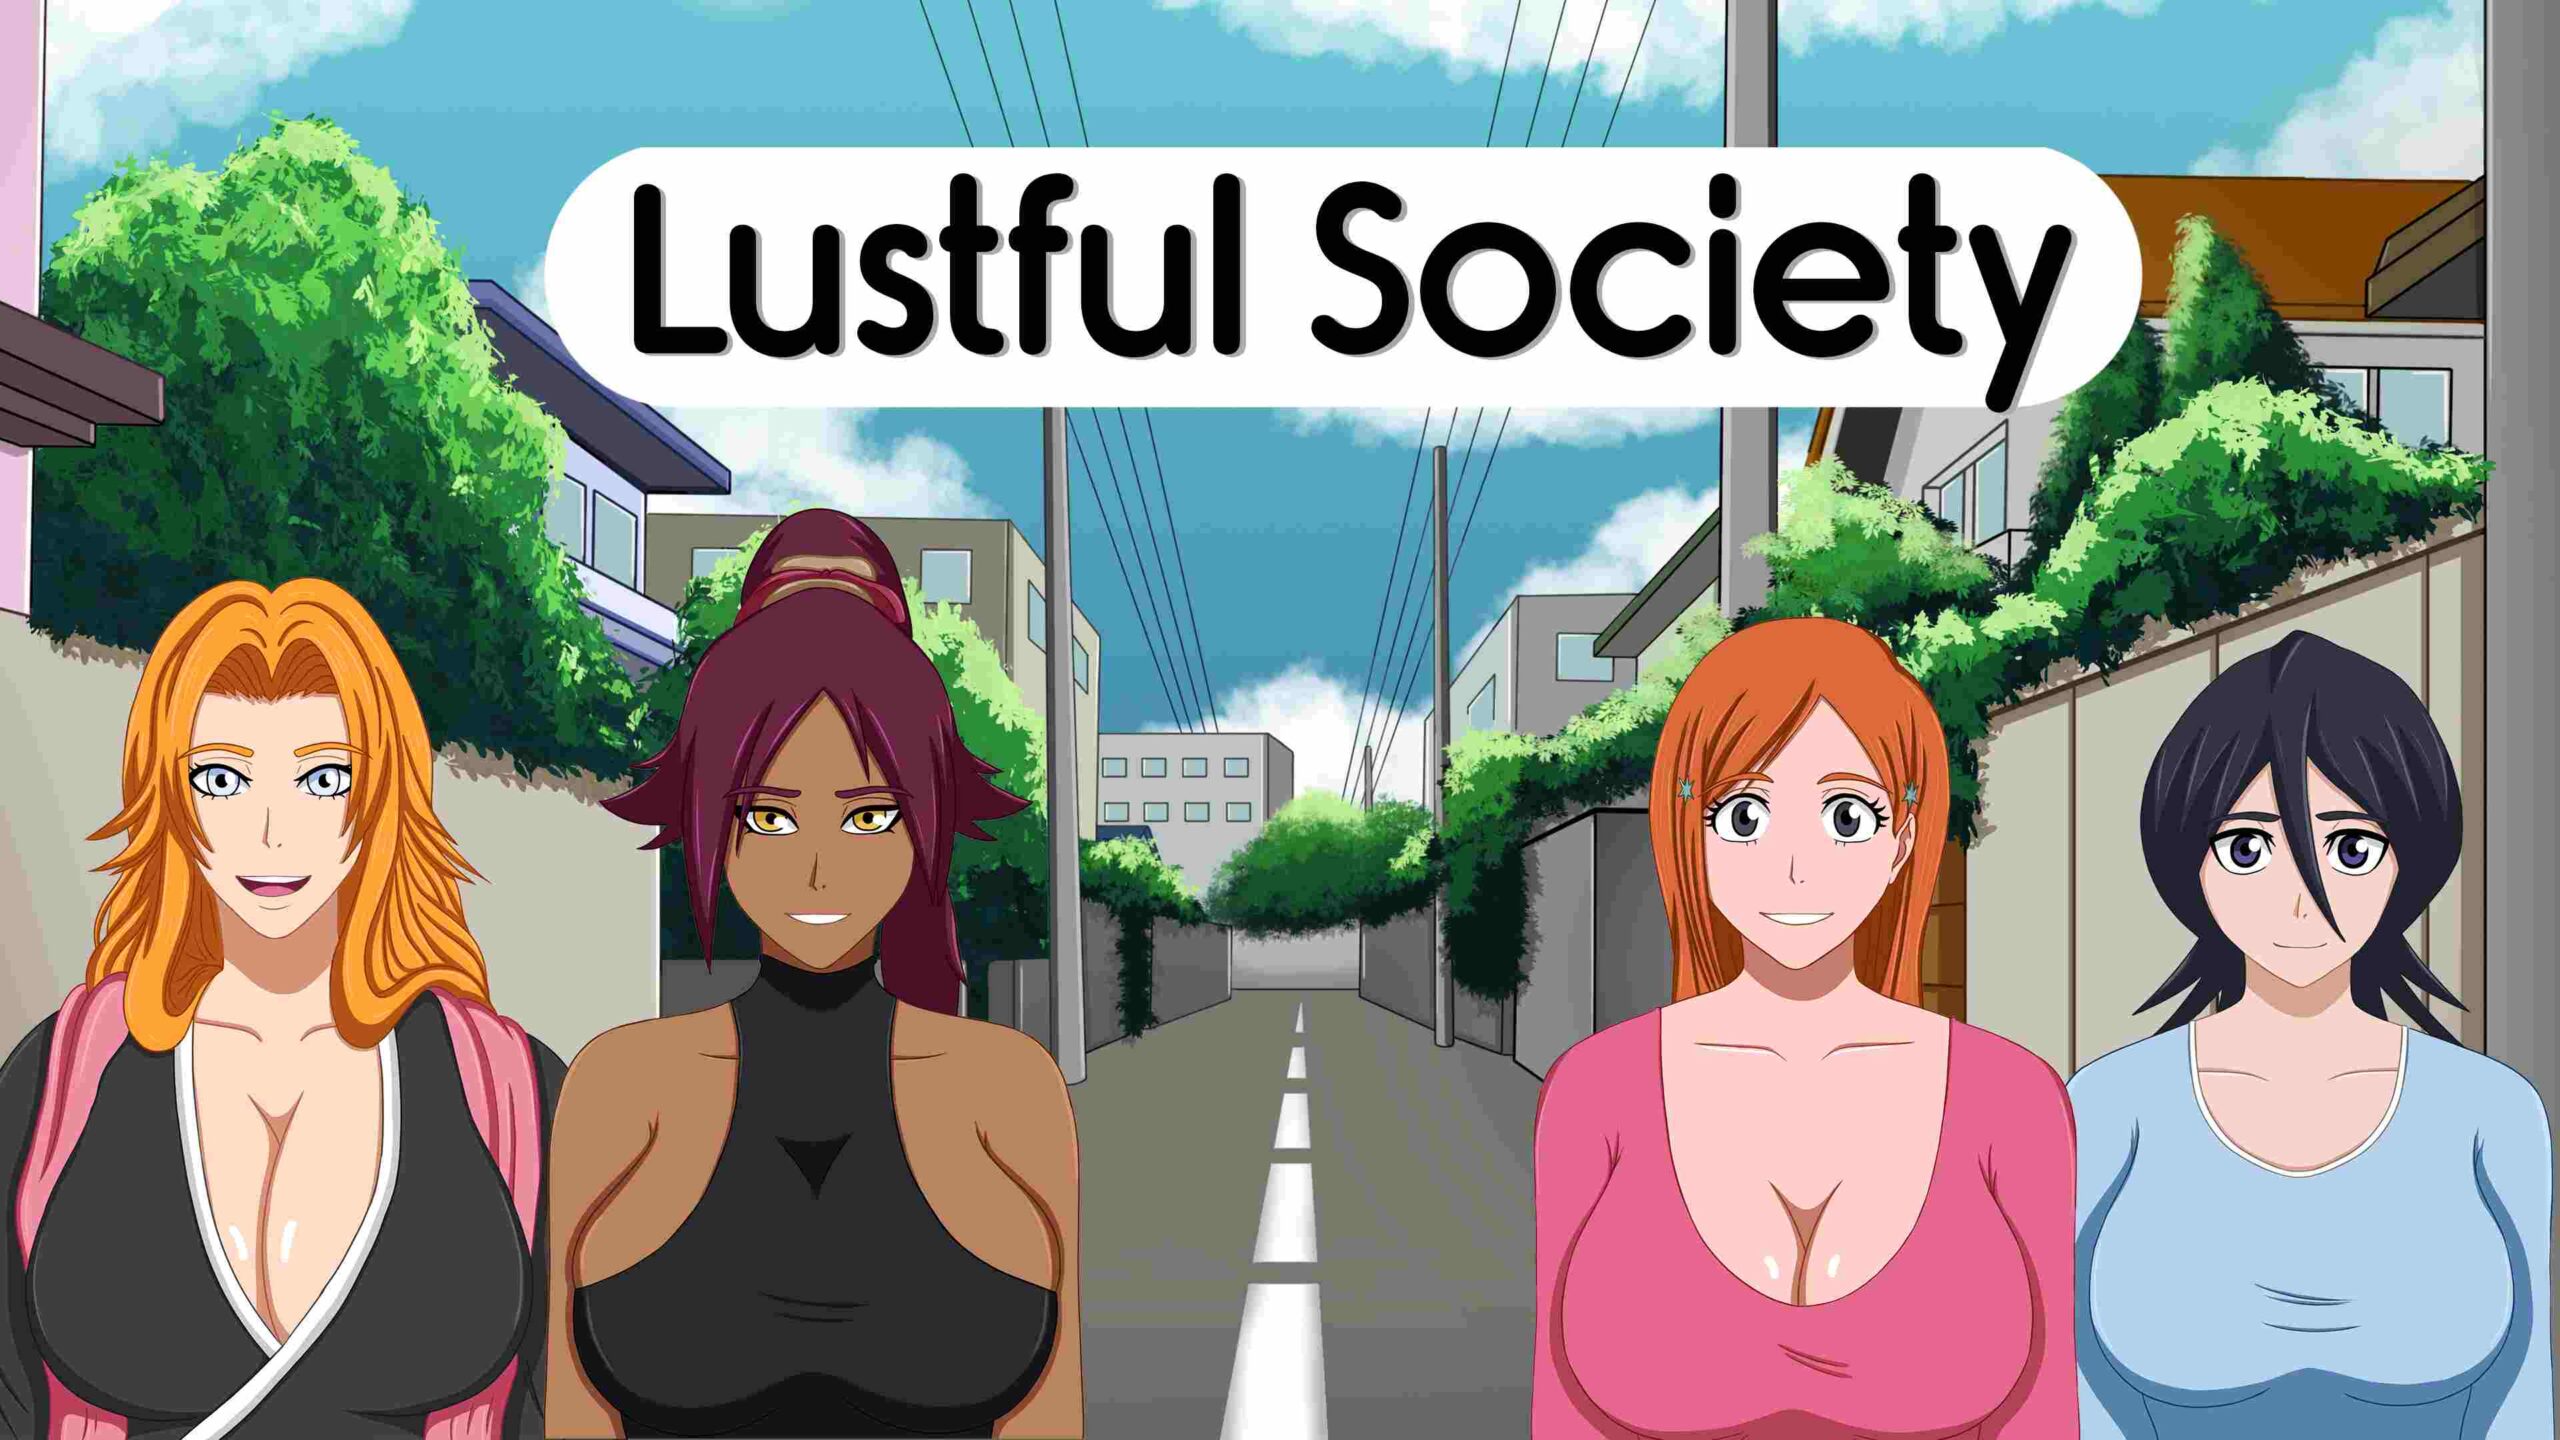 Lustful Society [BigBoner] Adult xxx Porn Game Download